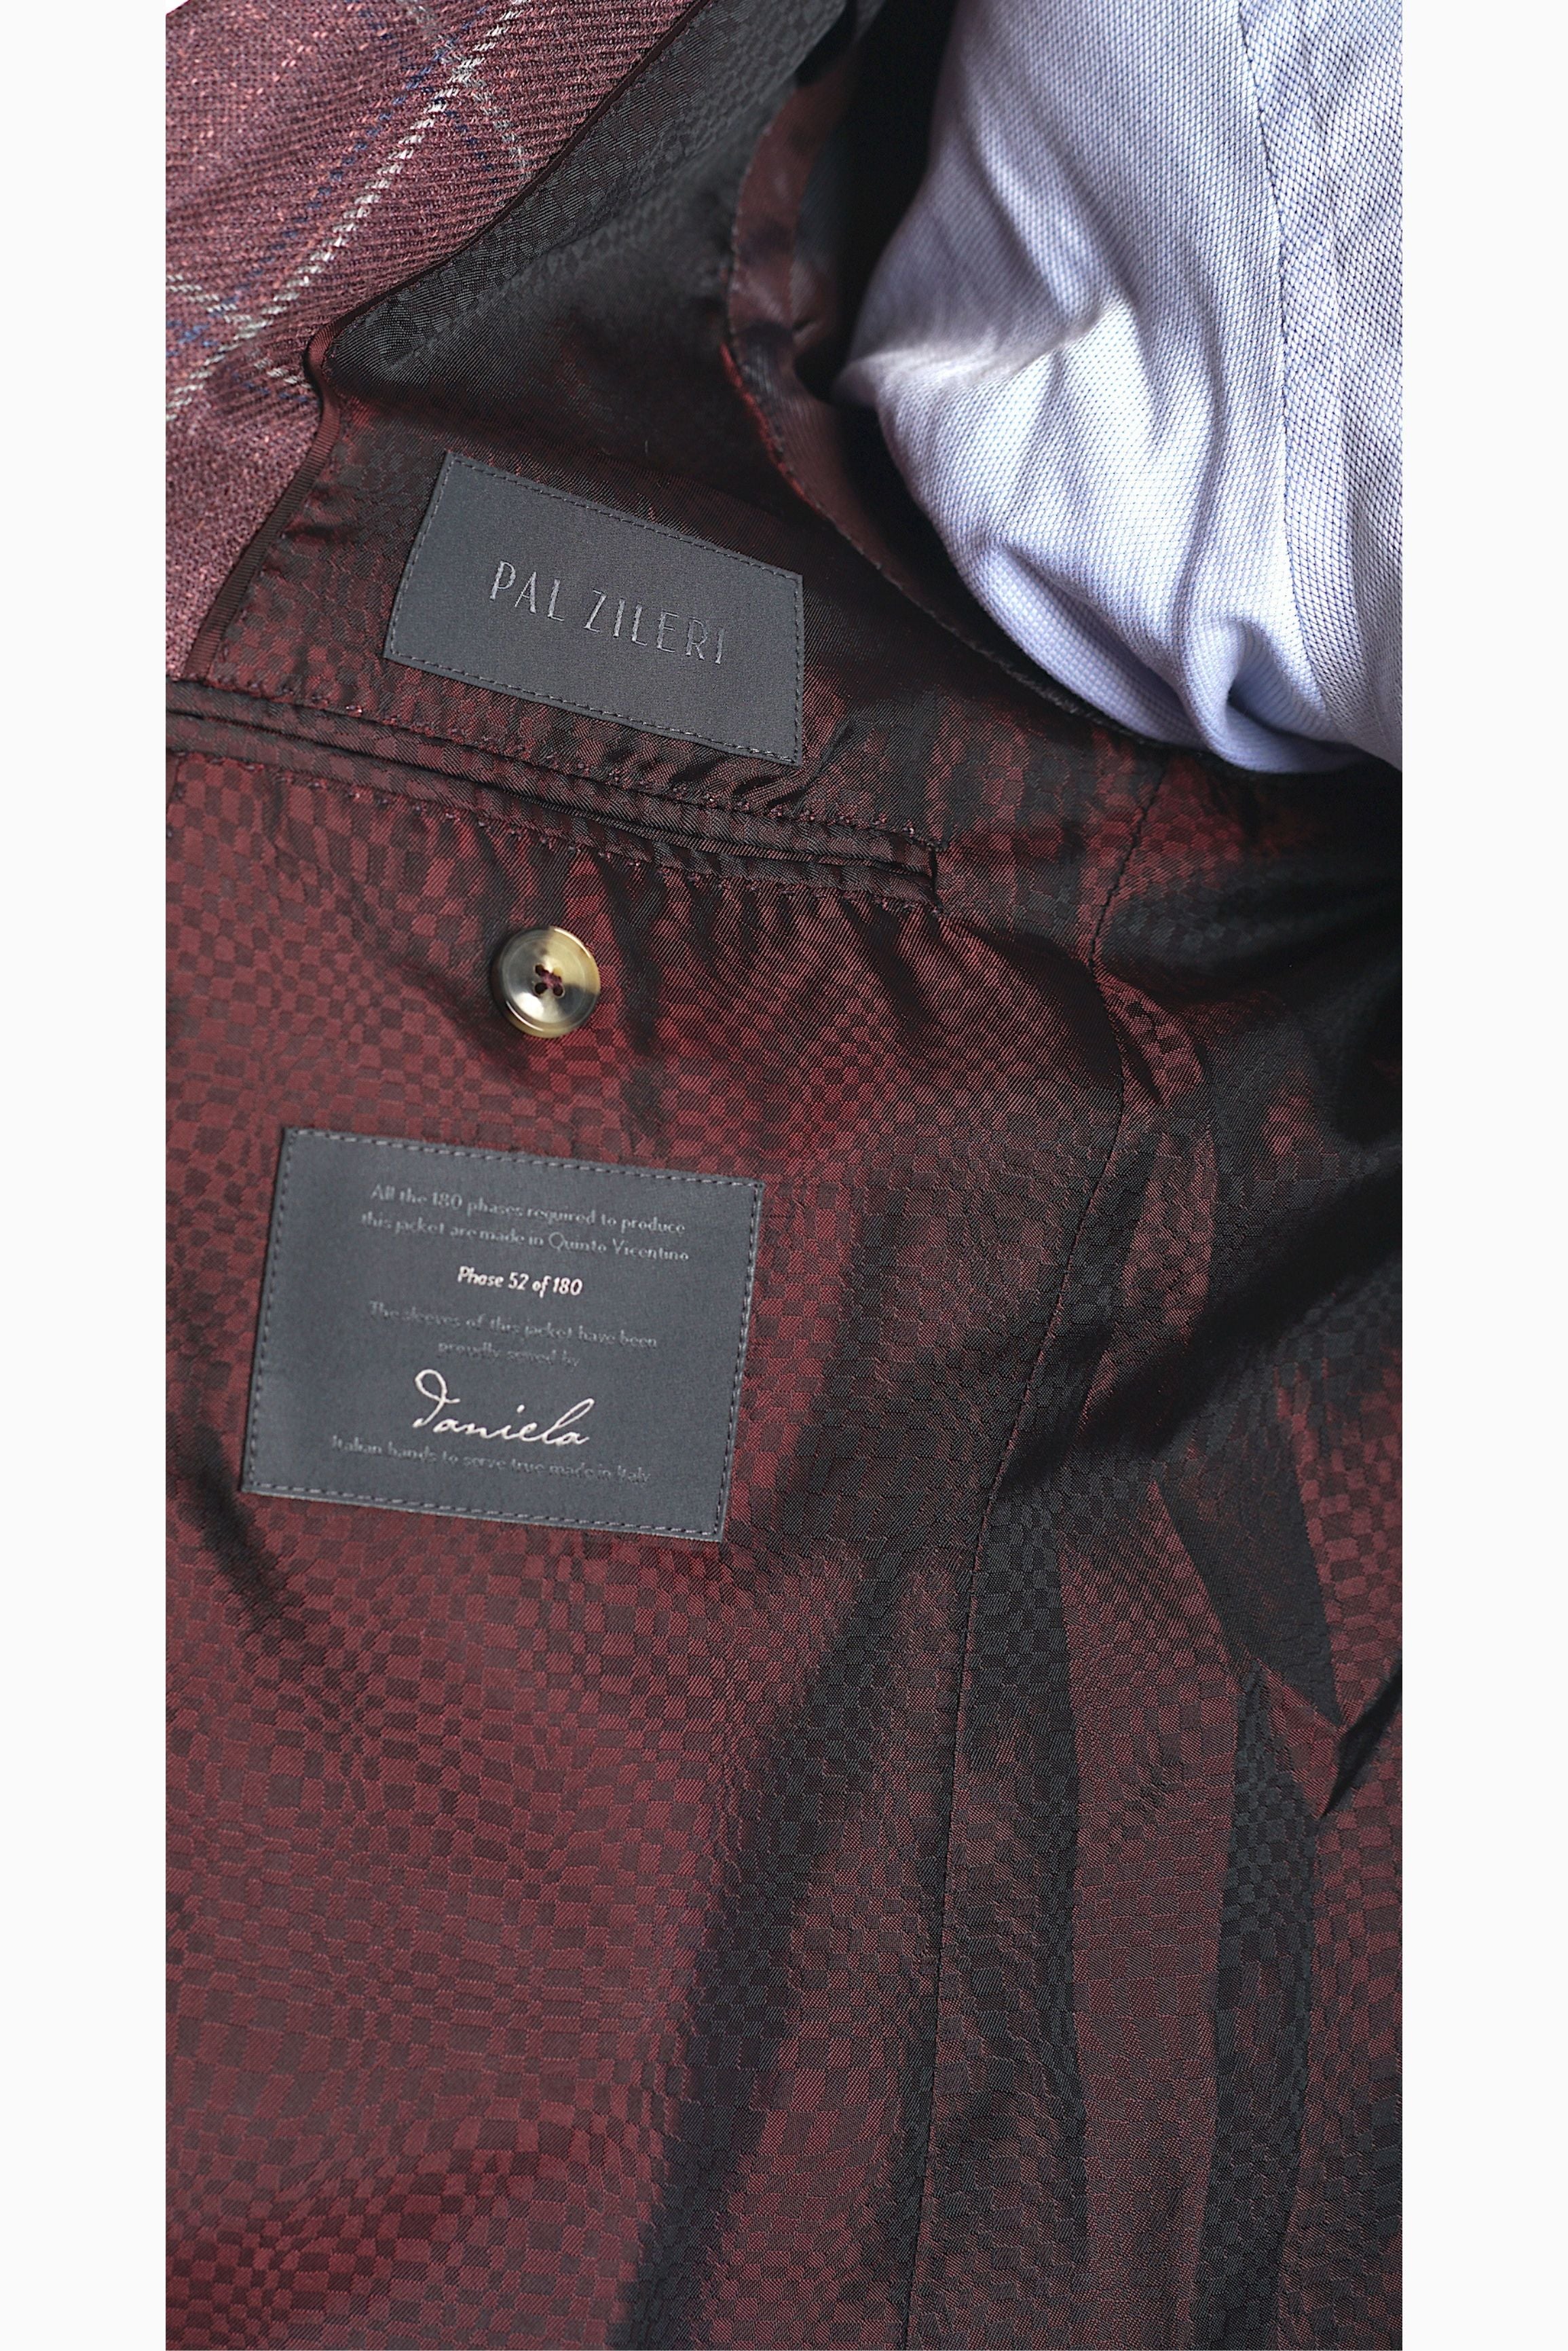 Pal Zileri Plaid Indigo Sport Jacket - Mastroianni Fashions